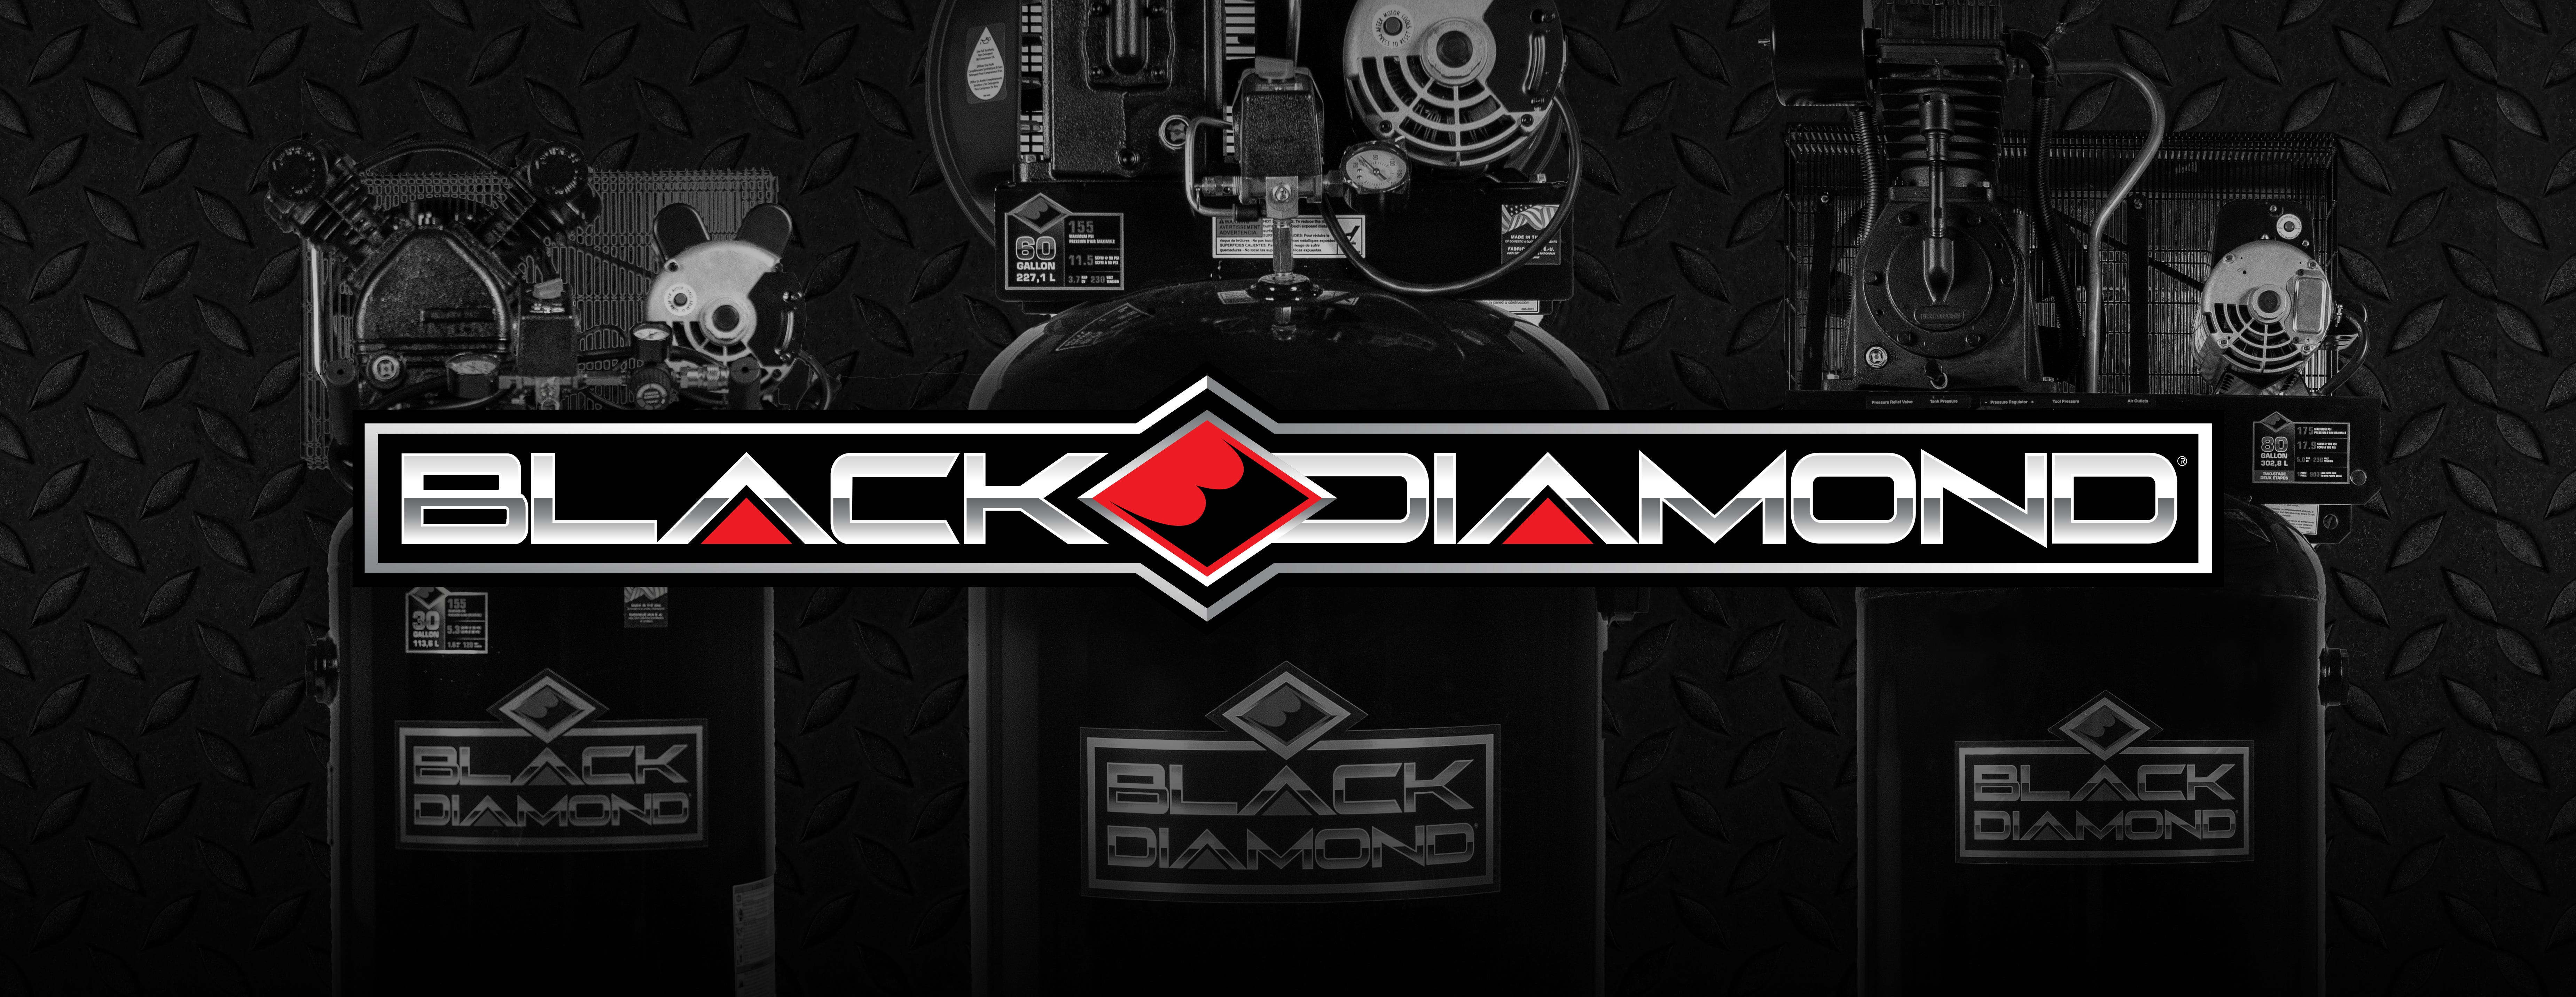 Black Diamond Compressors on a black background